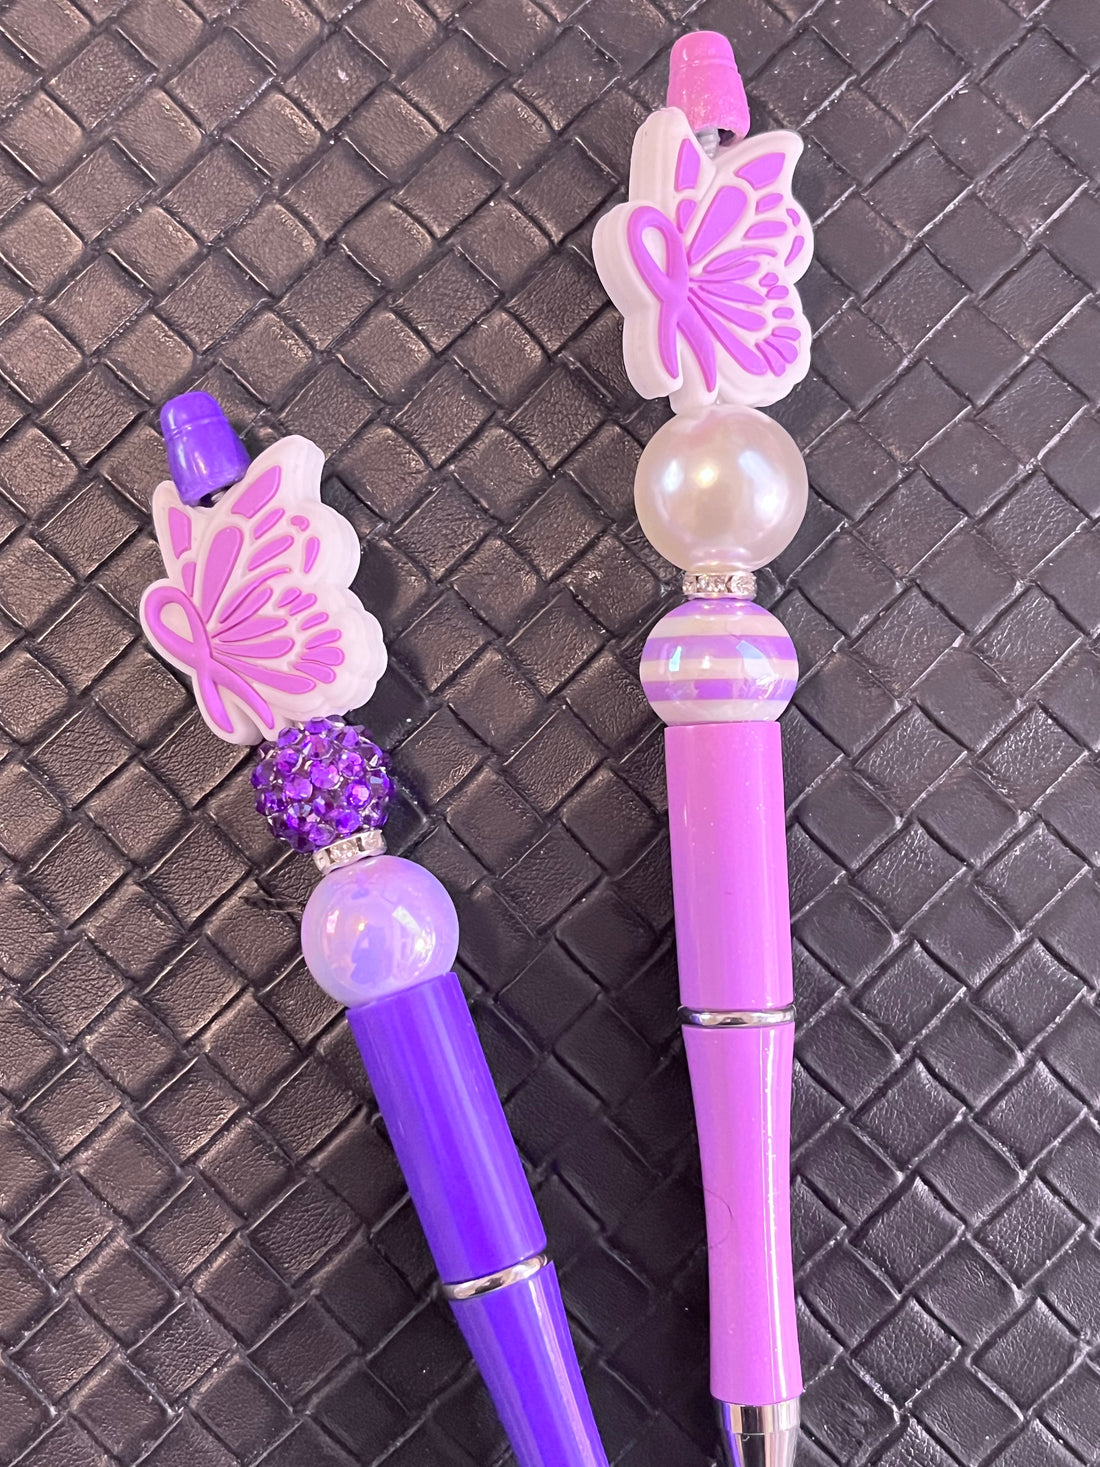 Cancer Support Bling Pens - Fight Cancer Bling Pens - Pink Bling Cancer Ink Pens, Custom Made Bling Pens